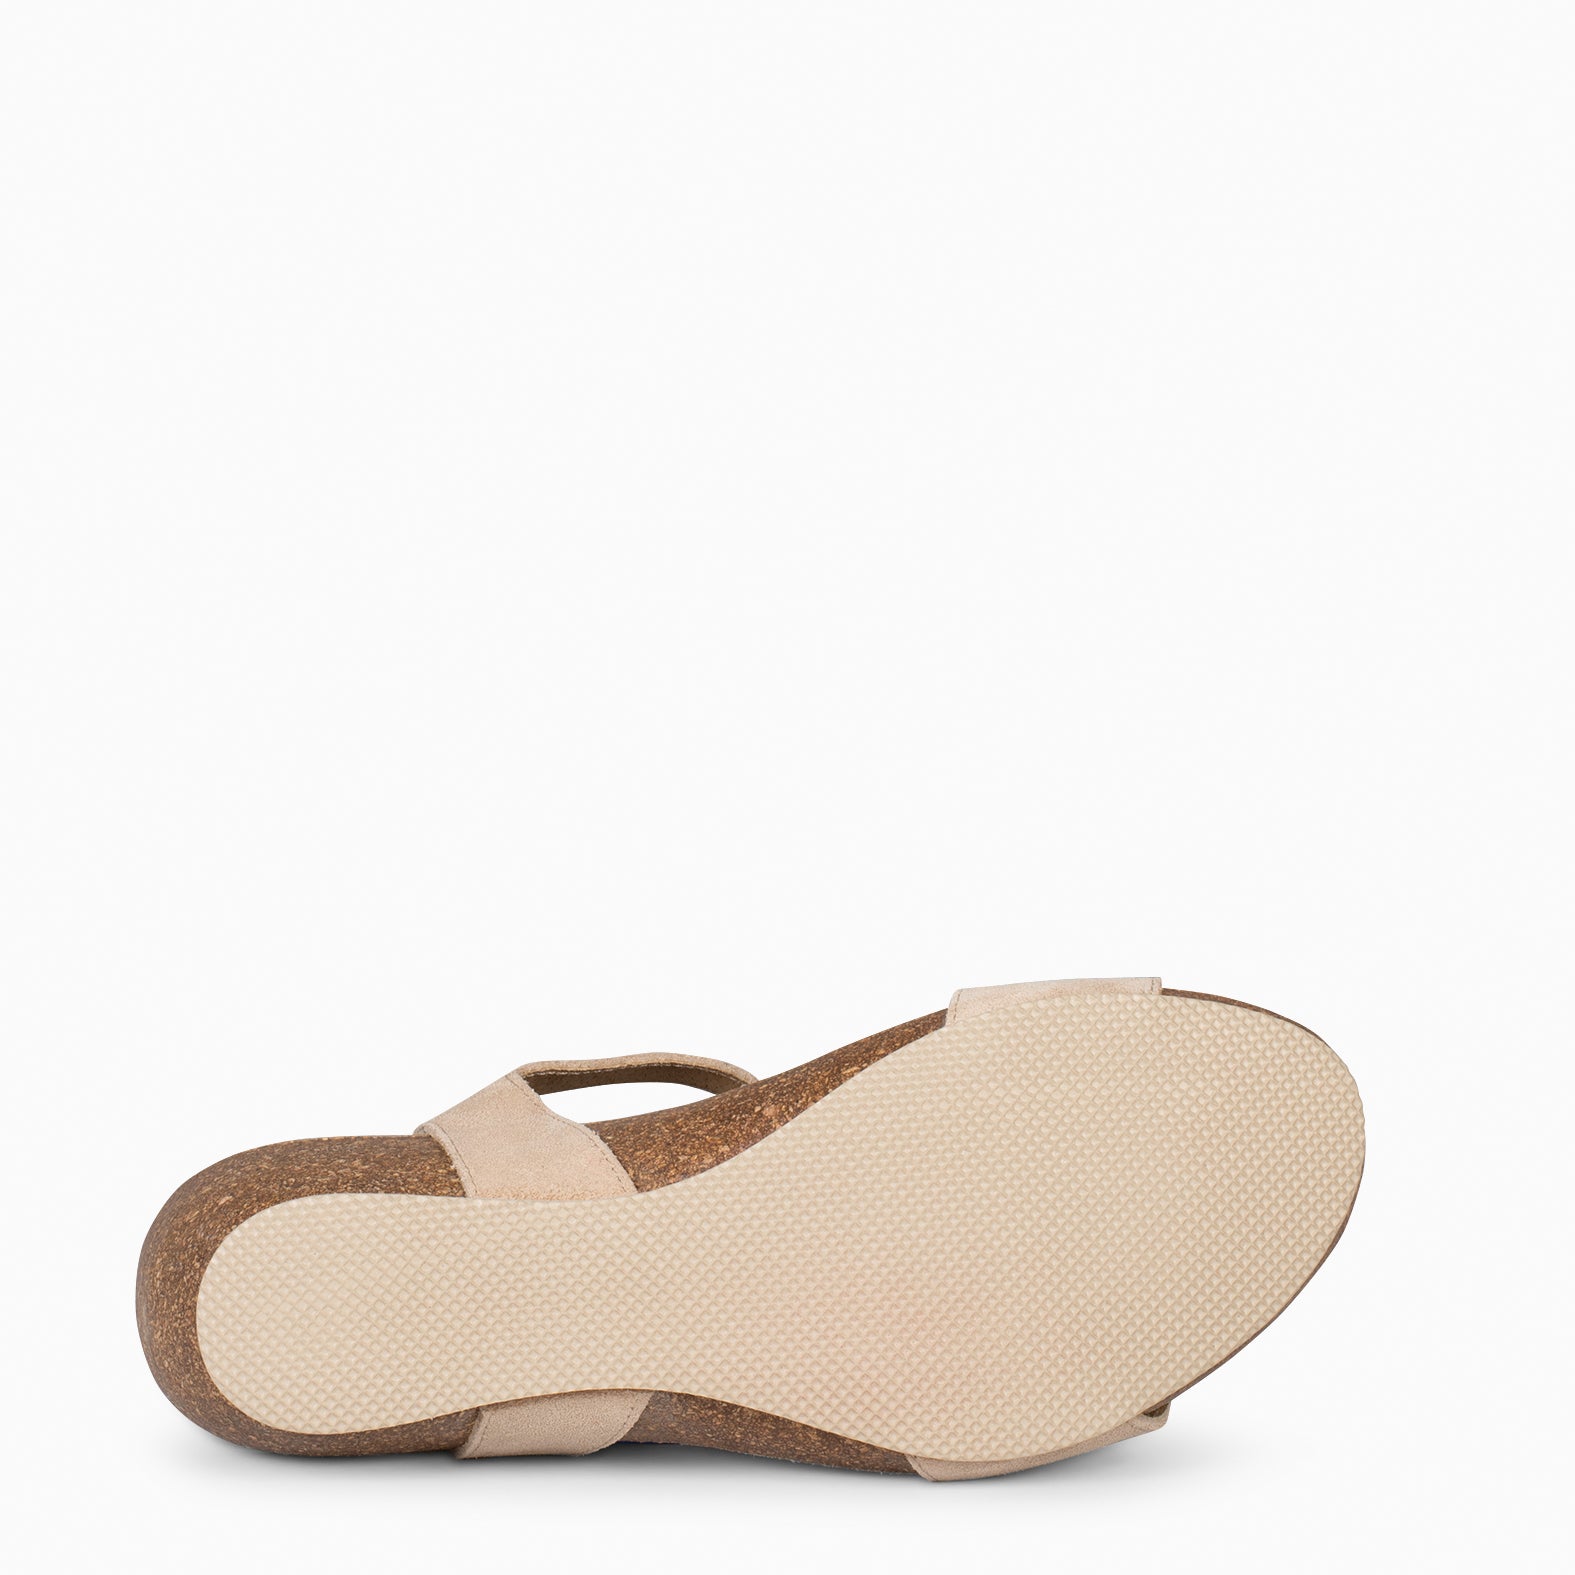 OAK - CAMEL  BIO Suede wedge sandals 